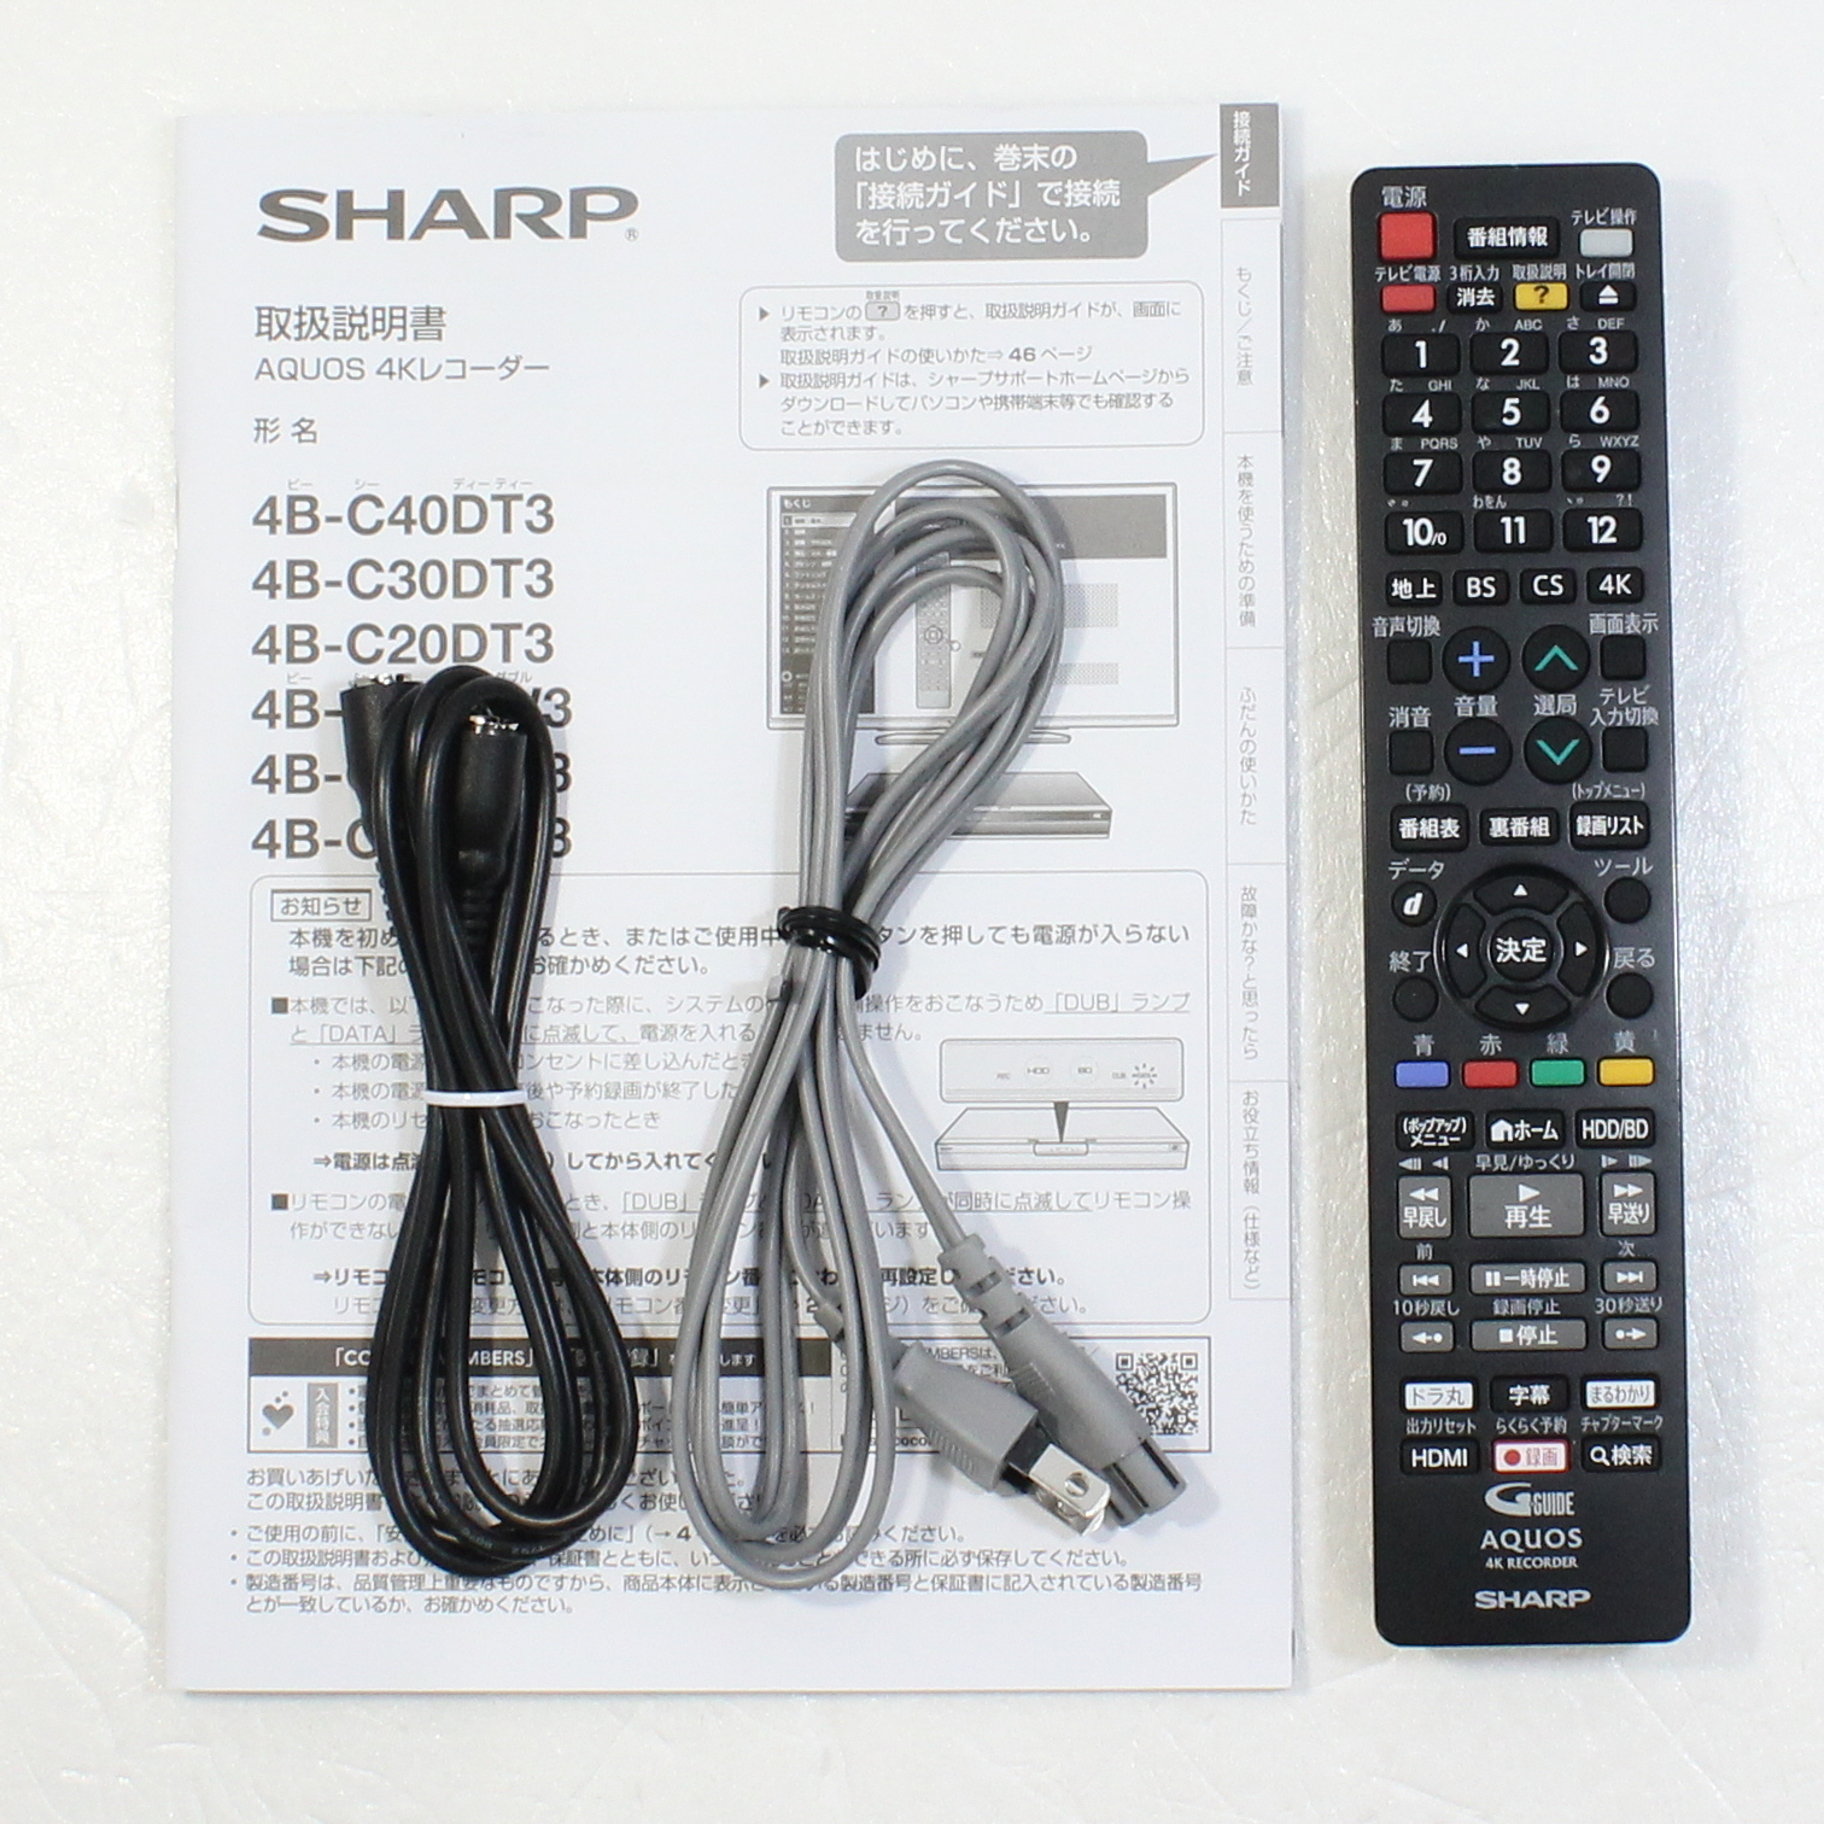 SHARP ブルーレイディスクレコーダー 4B-C20DW3 - テレビ/映像機器